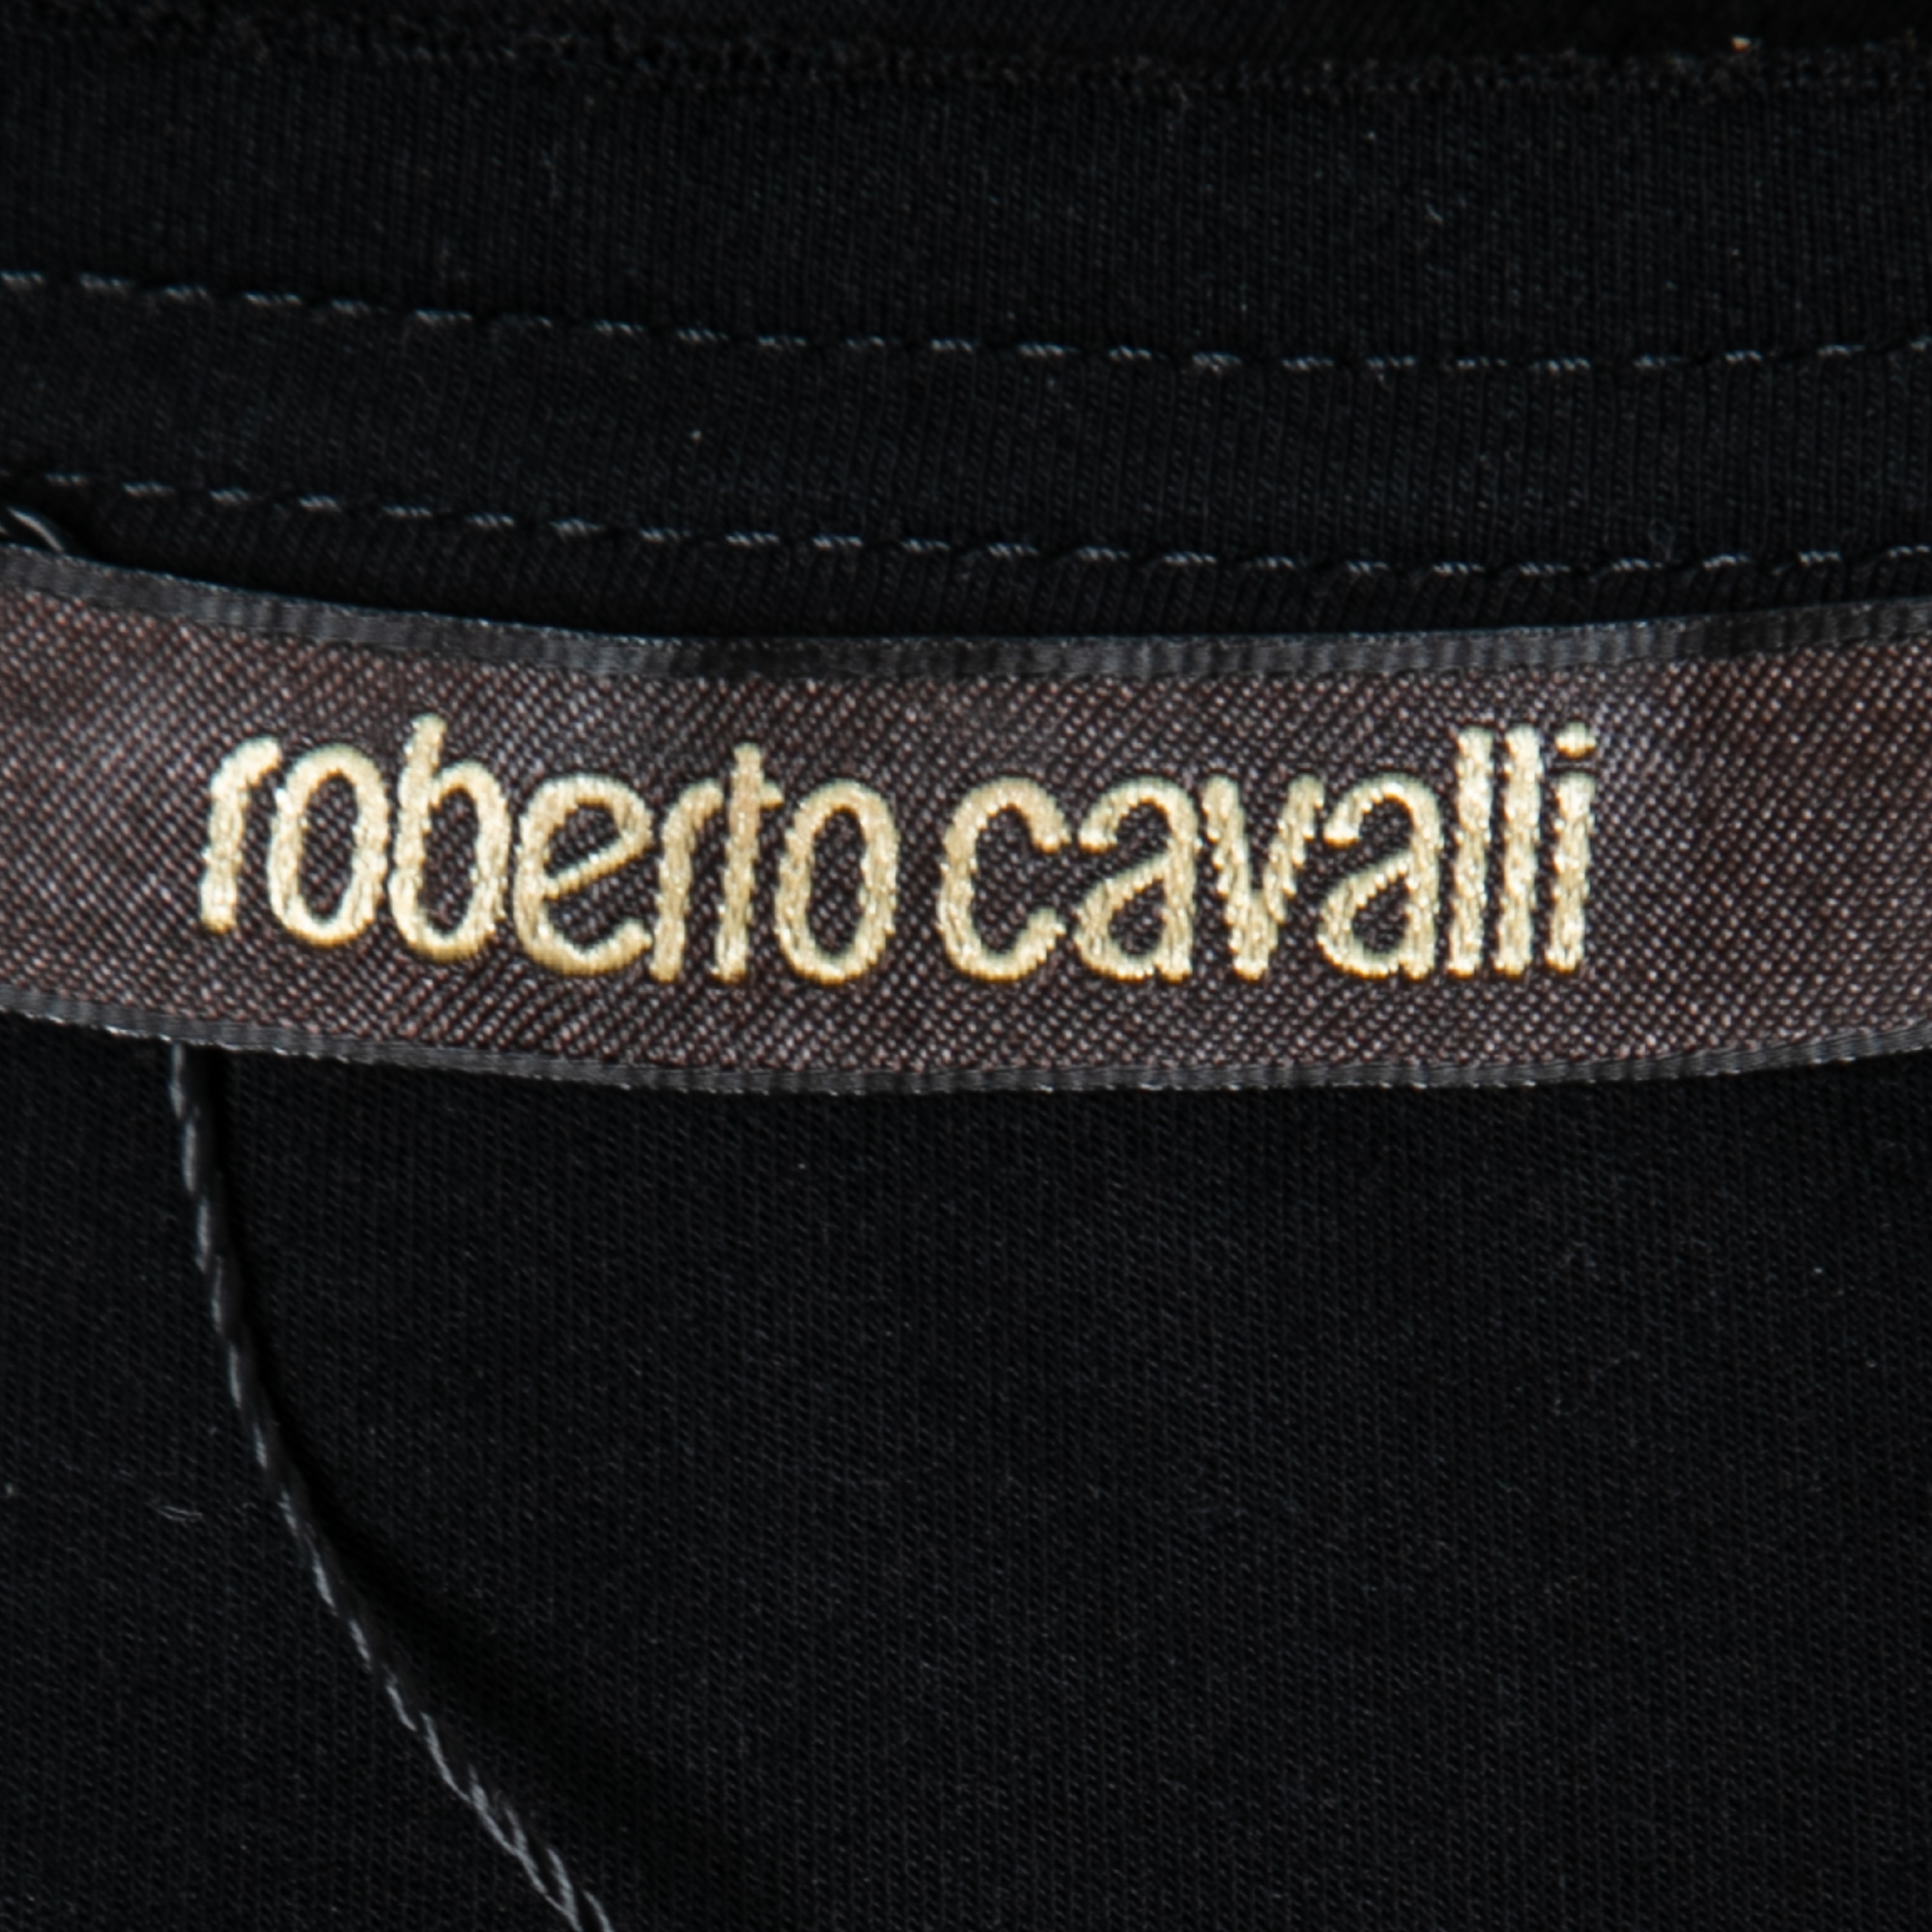 Roberto Cavalli Black Jersey Parrot Printed Top M